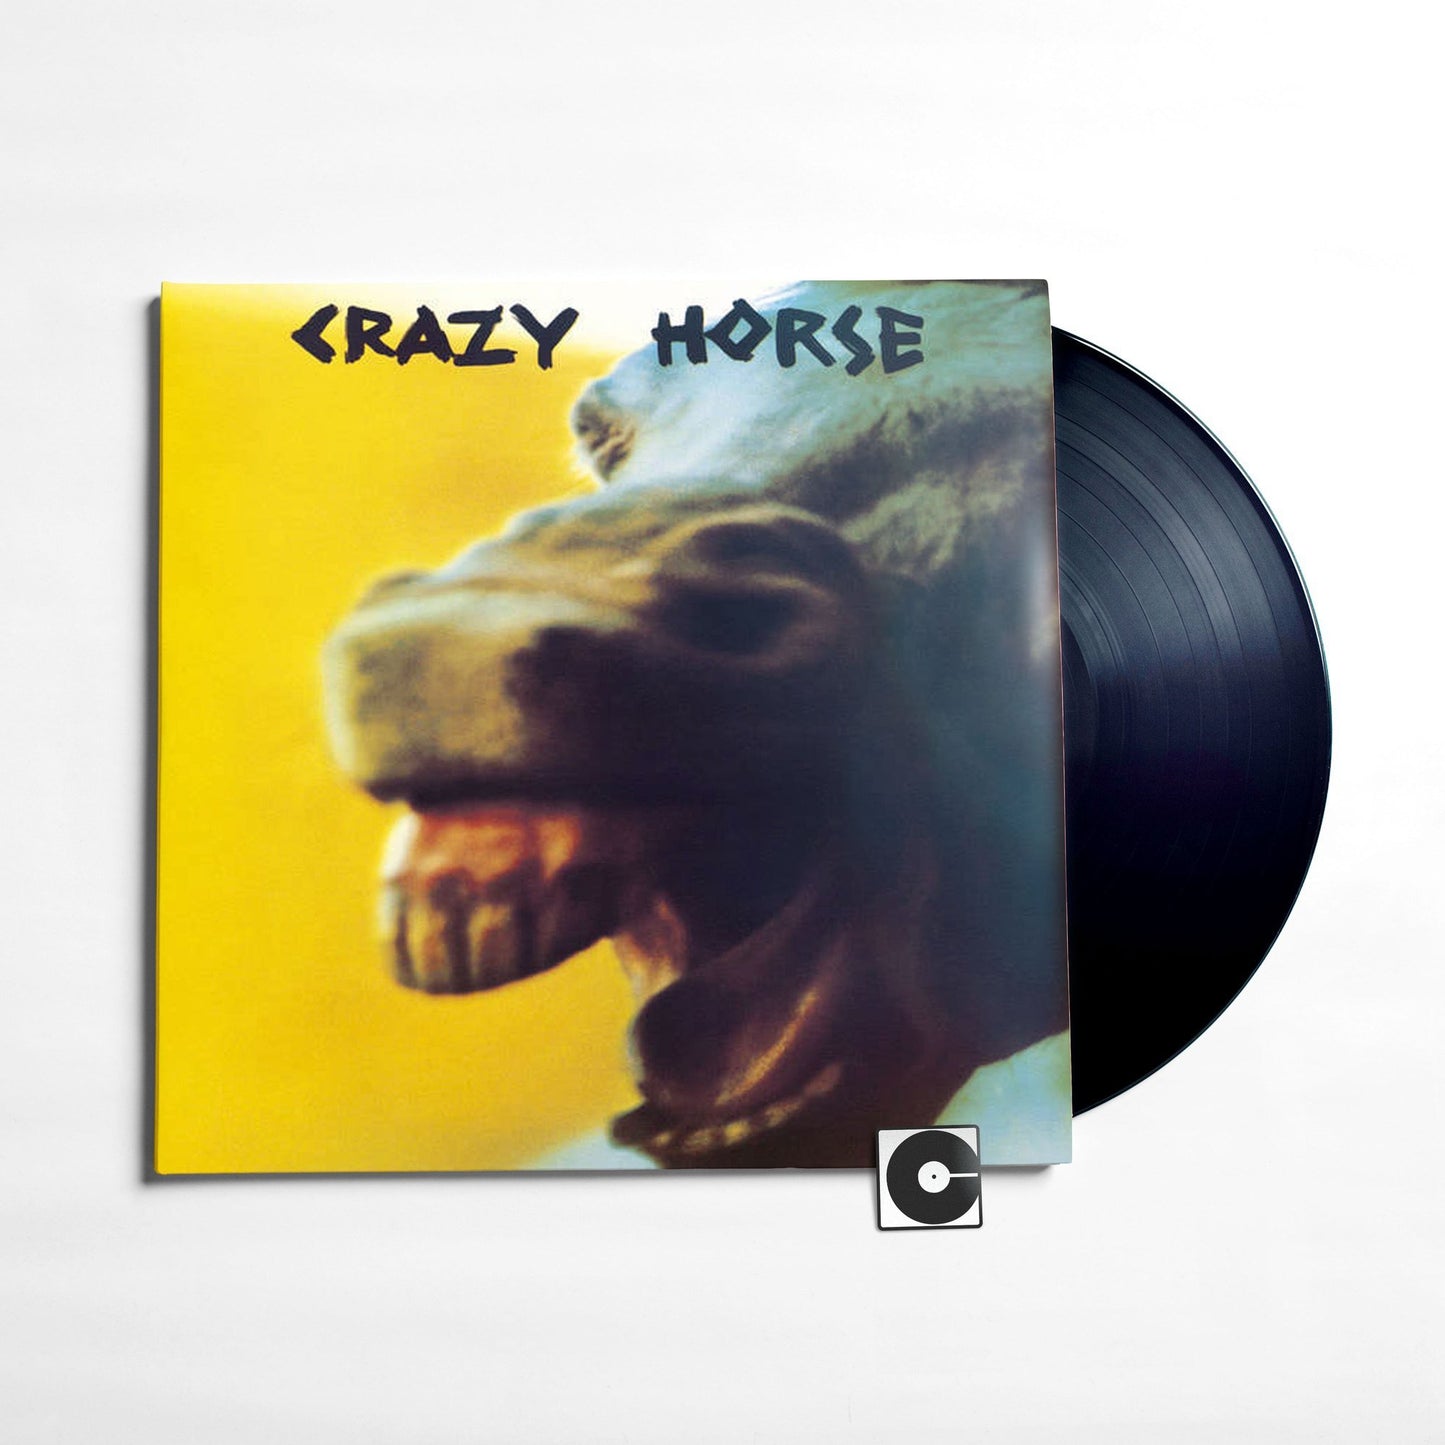 Crazy Horse - "Crazy Horse"